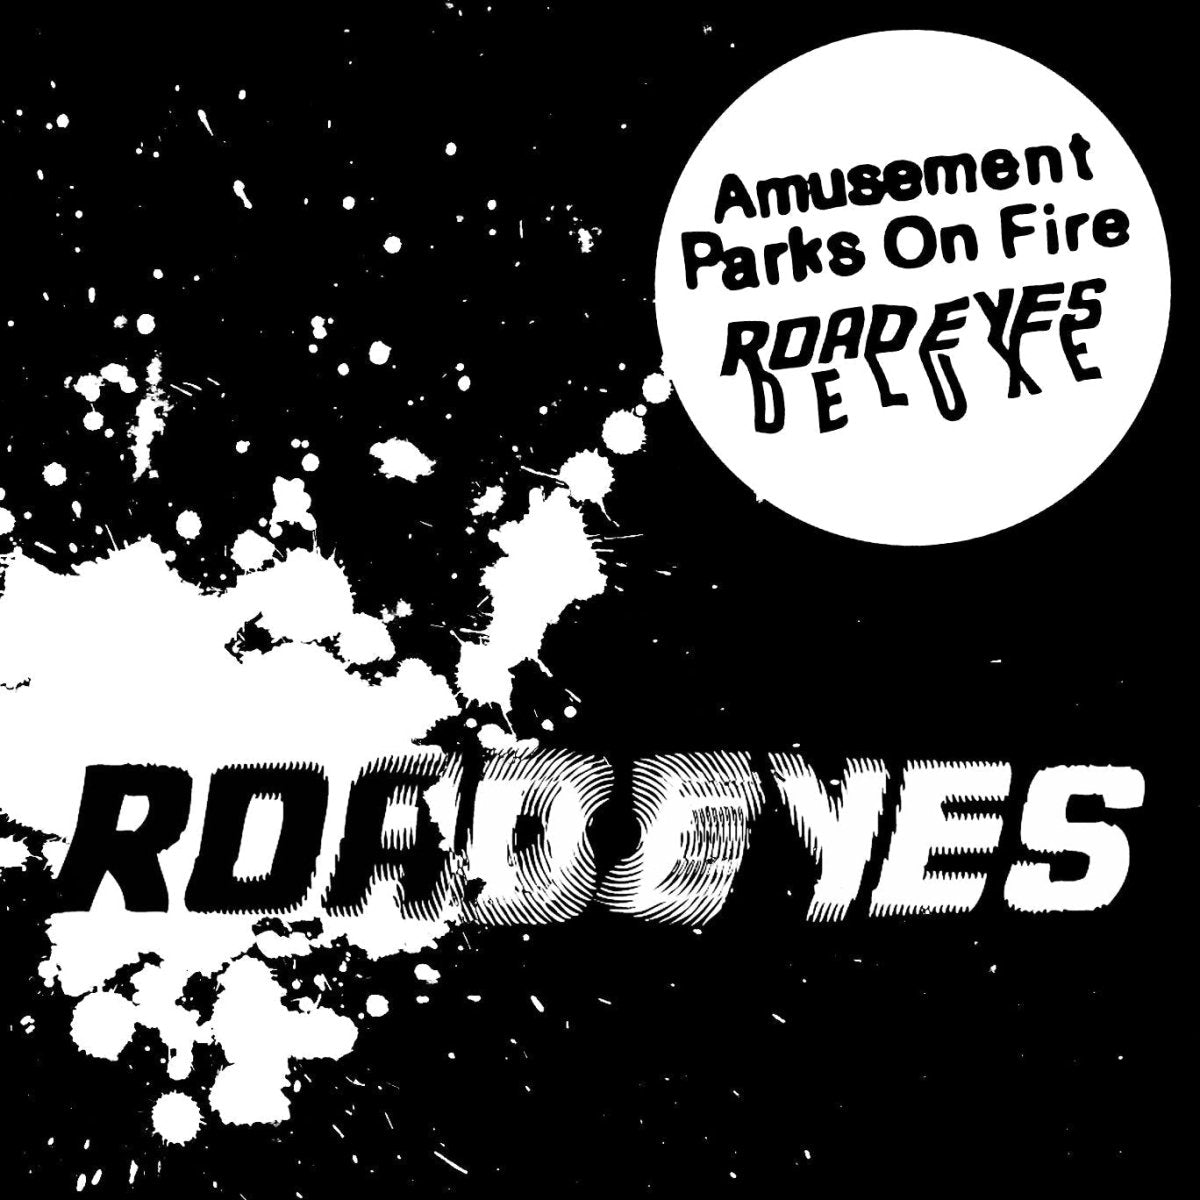 Amusement Parks On Fire - Road Eyes Records & LPs Vinyl